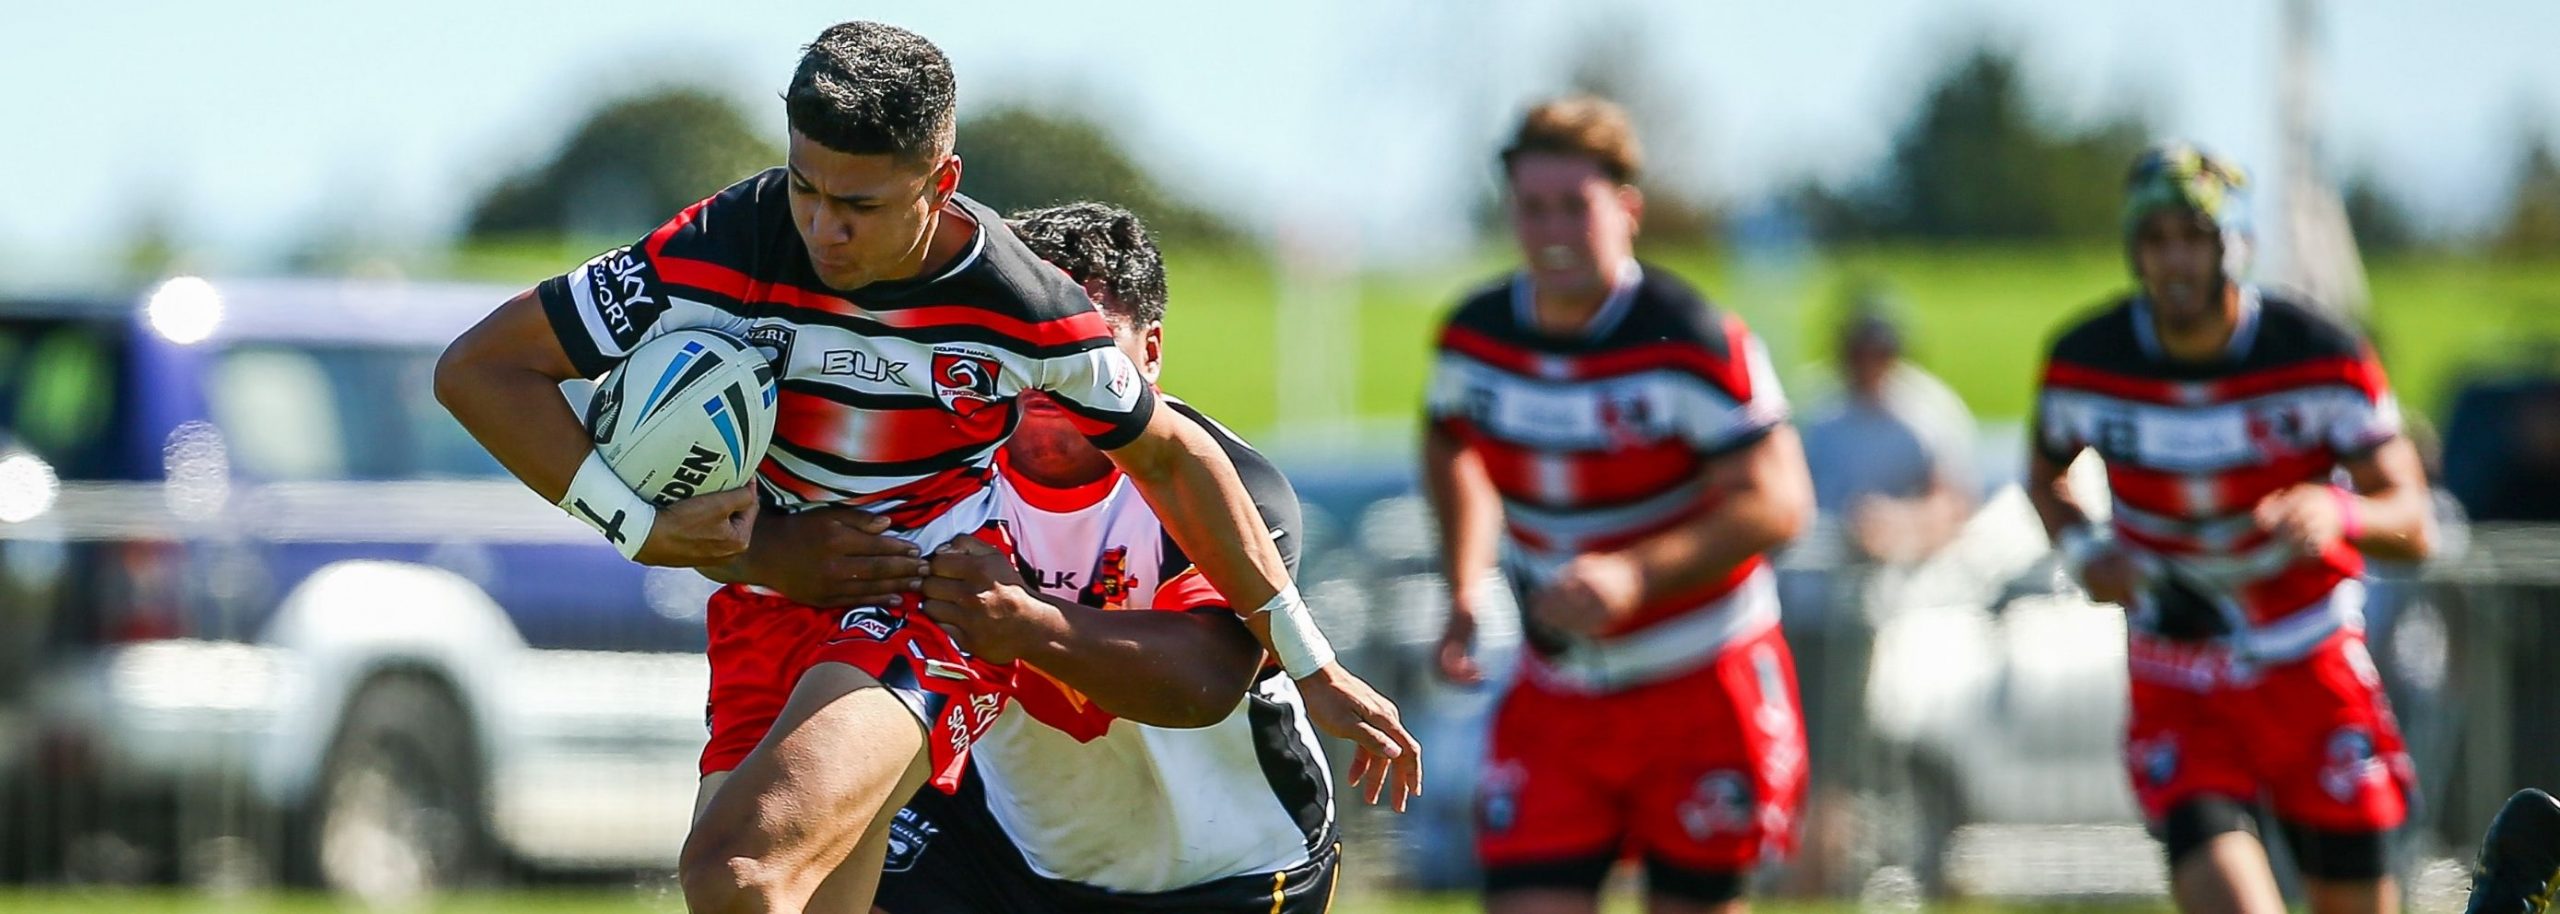 Counties Manukau dominate with an impressive win over Waikato